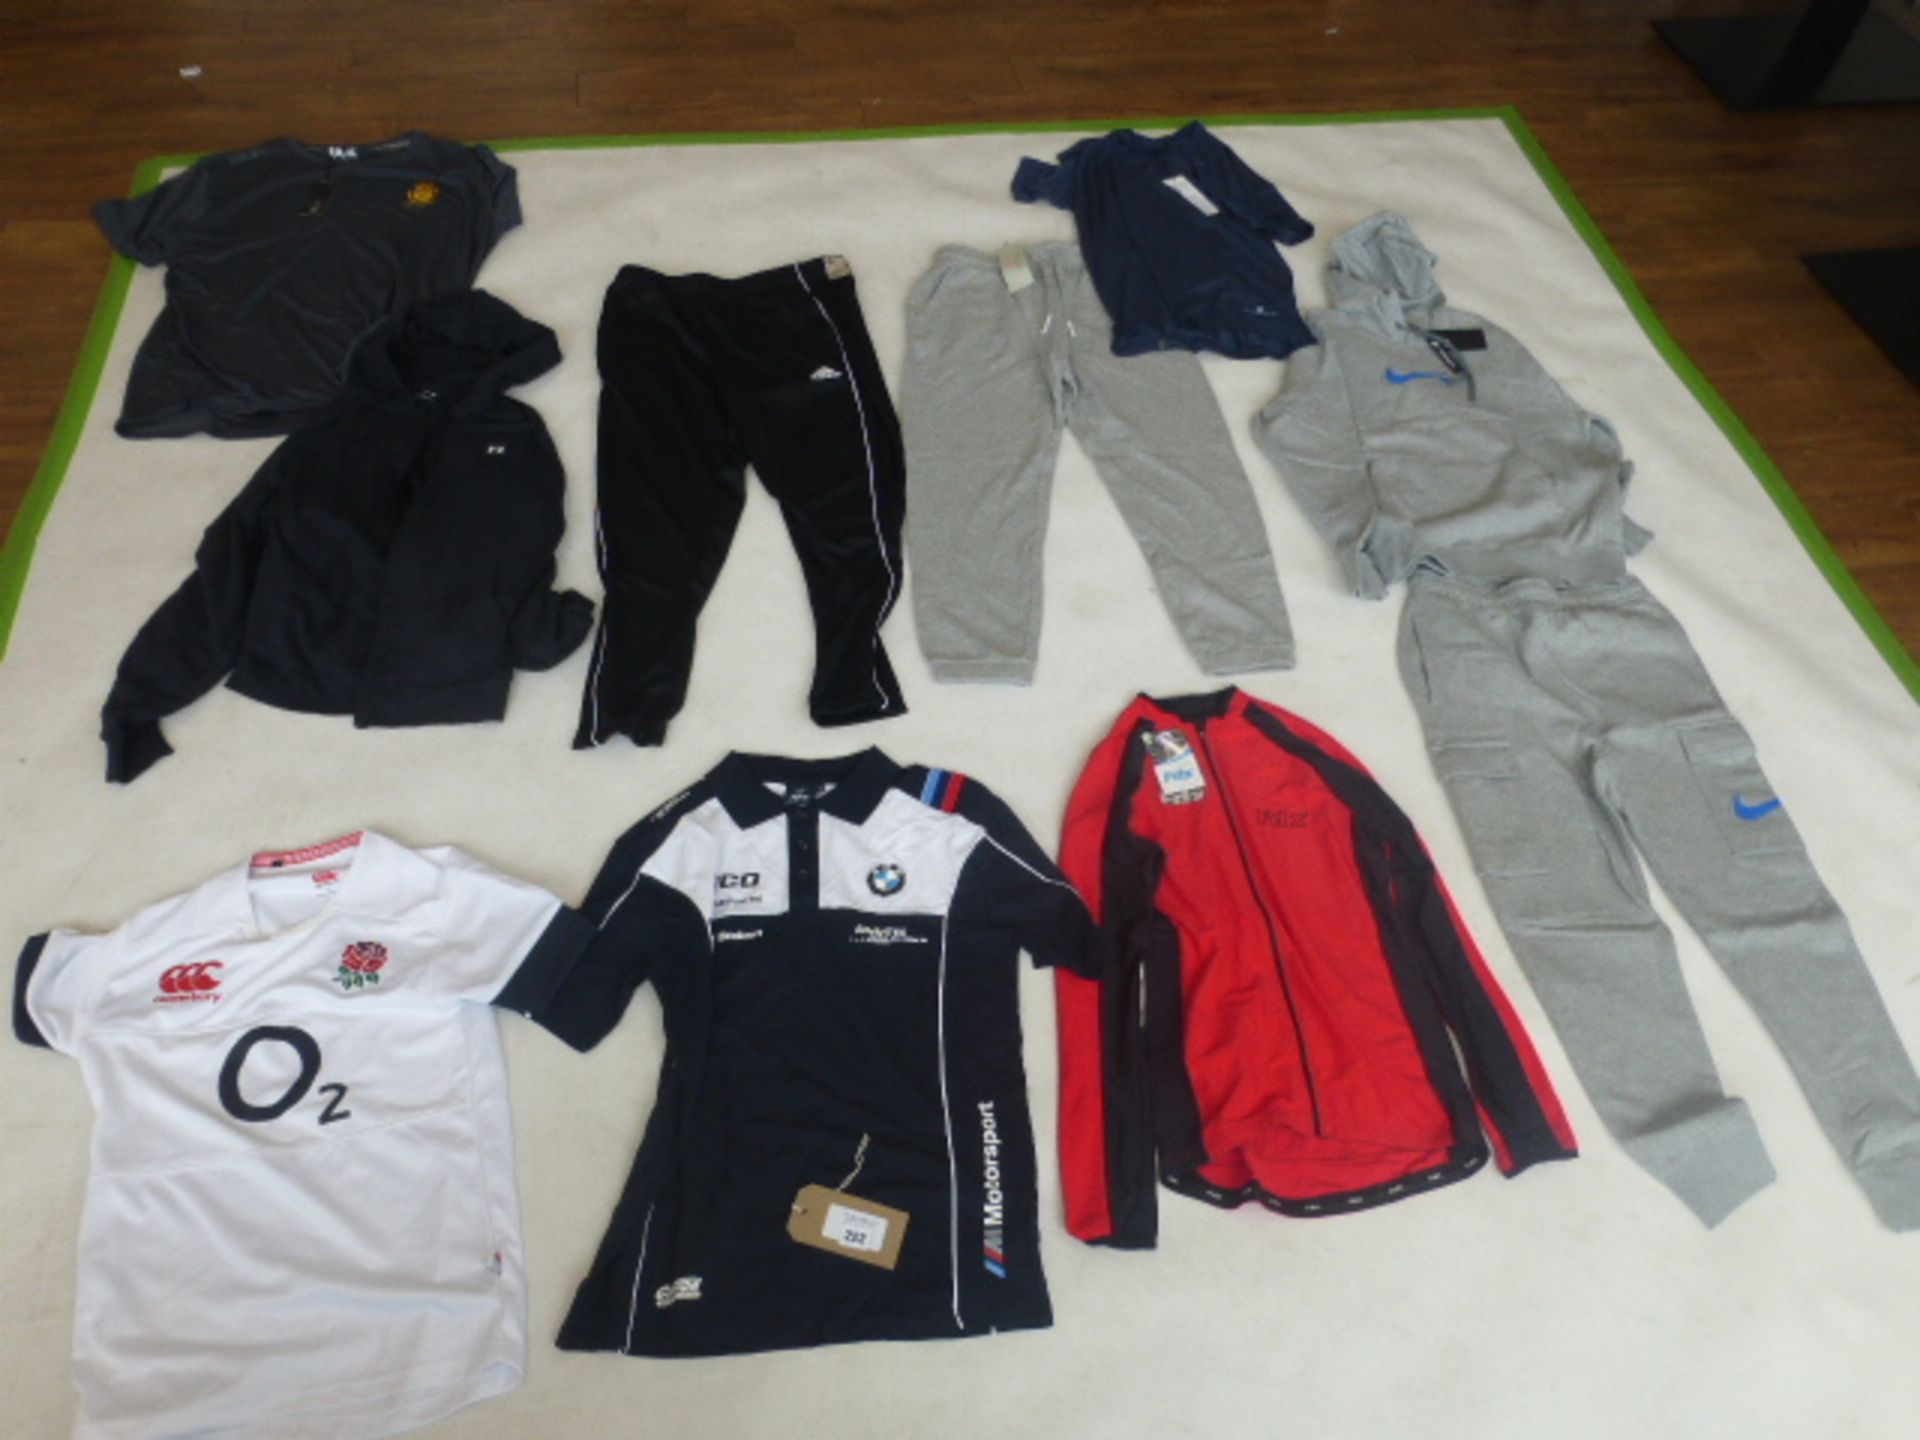 Selection of sportswear to include Nike, Sweaty Betty, Under Armour, etc